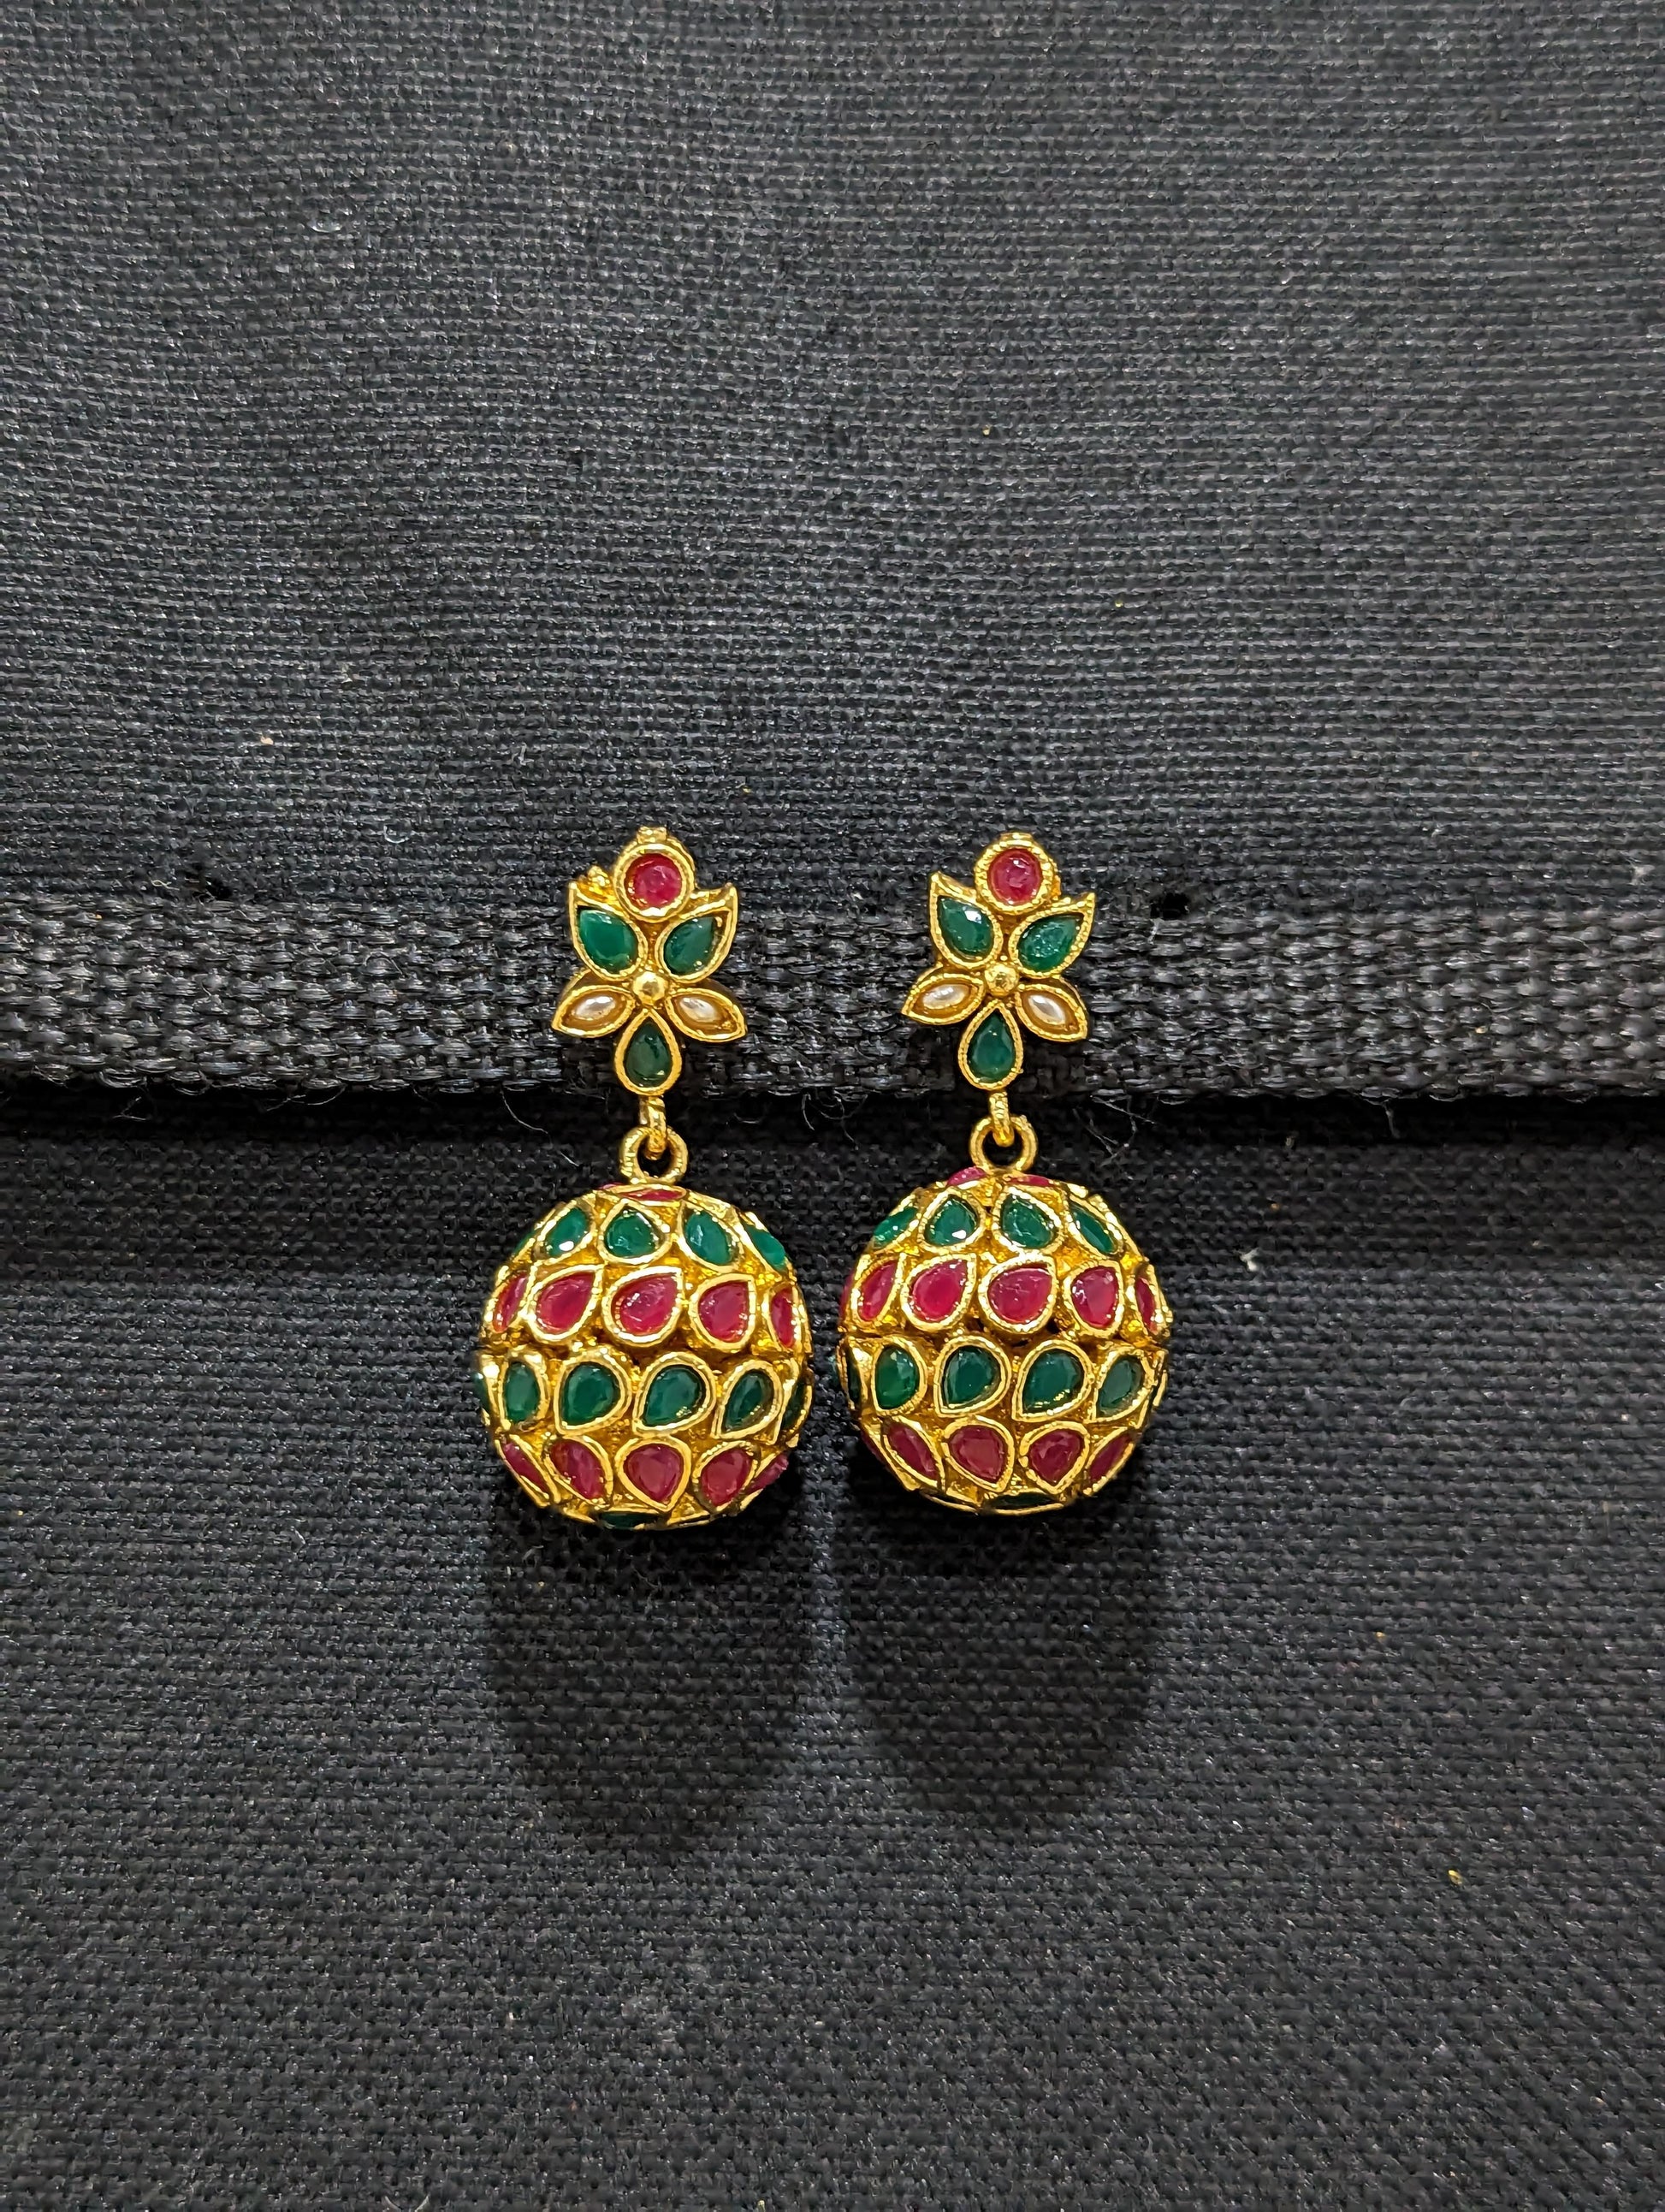 Gold plated ball jhumka earrings - Simpliful